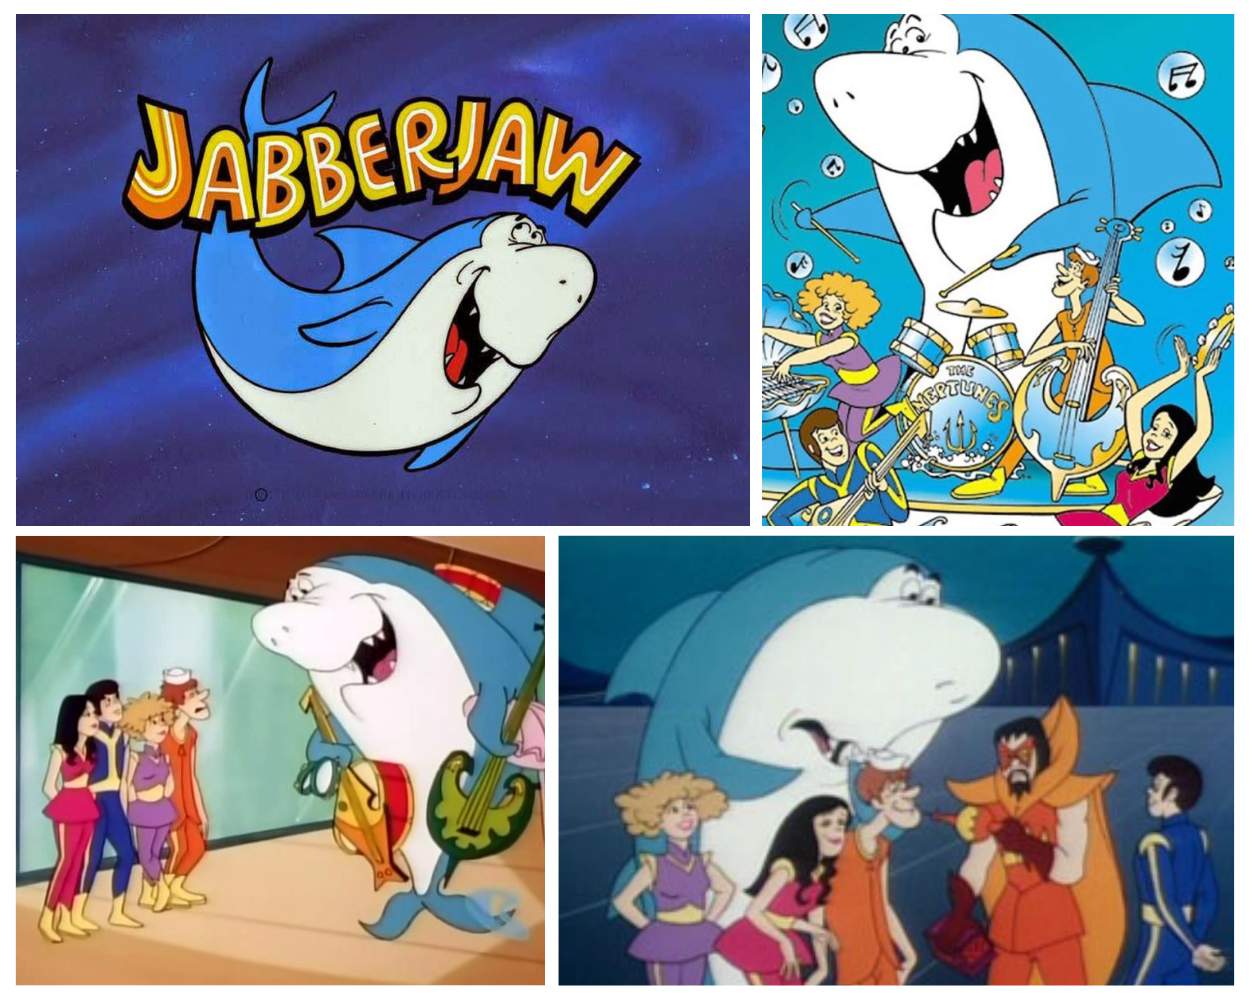 Jabberjaw - hanna barbera characters